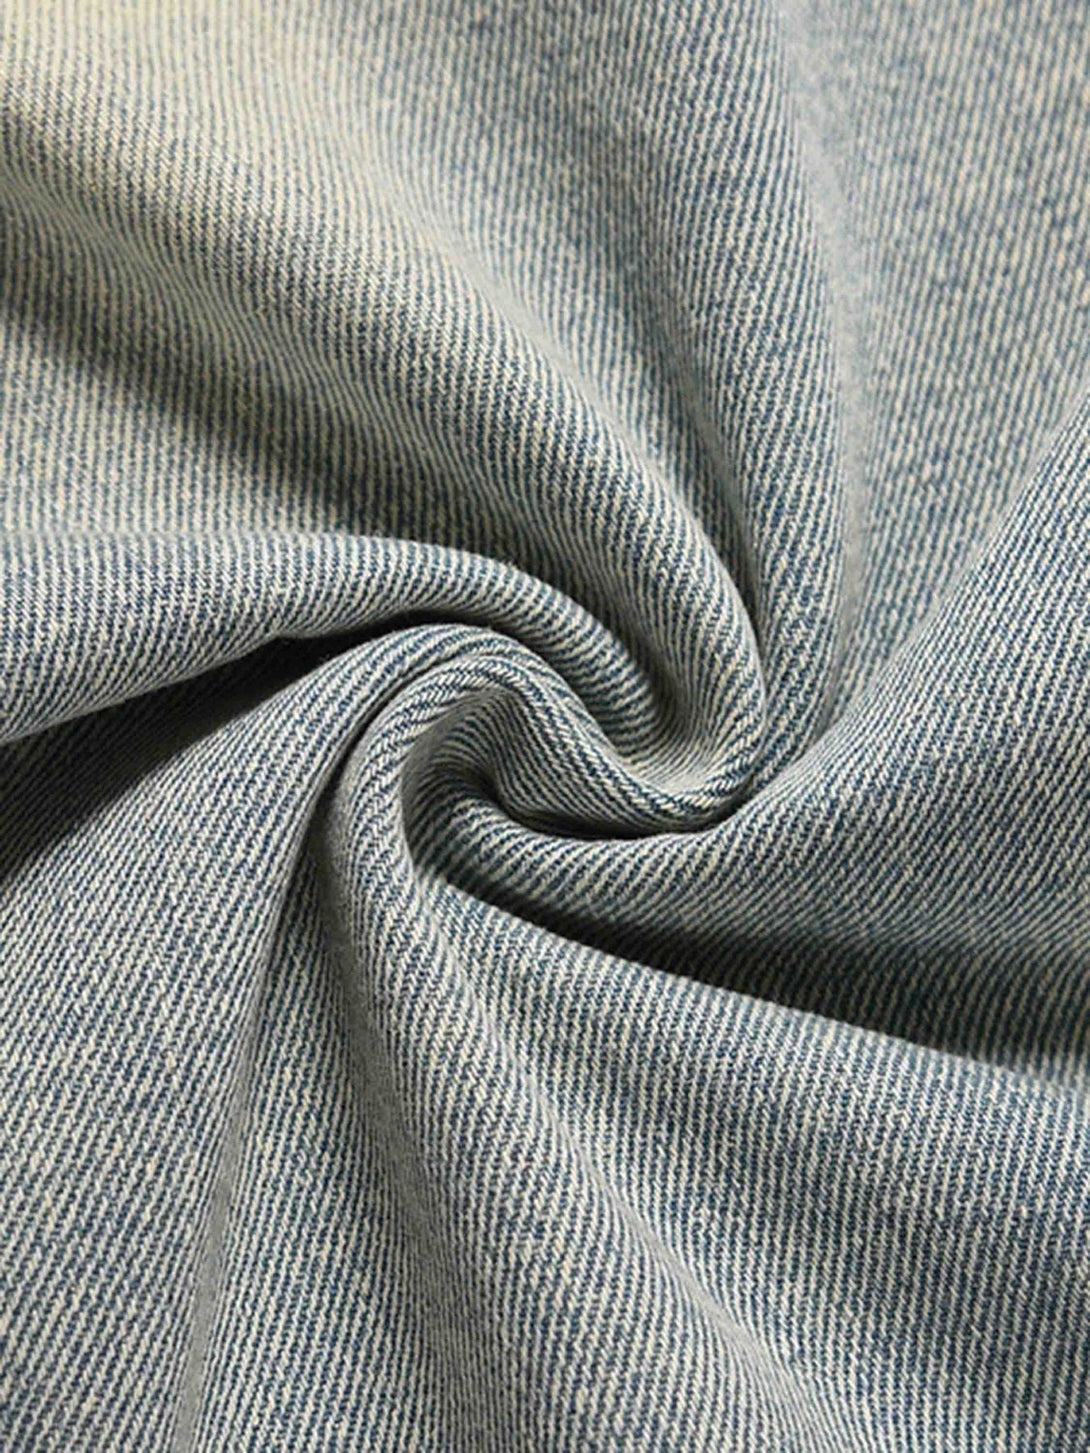 Majesda® - Washed And Worn Loose Jeans - 1953- Outfit Ideas - Streetwear Fashion - majesda.com